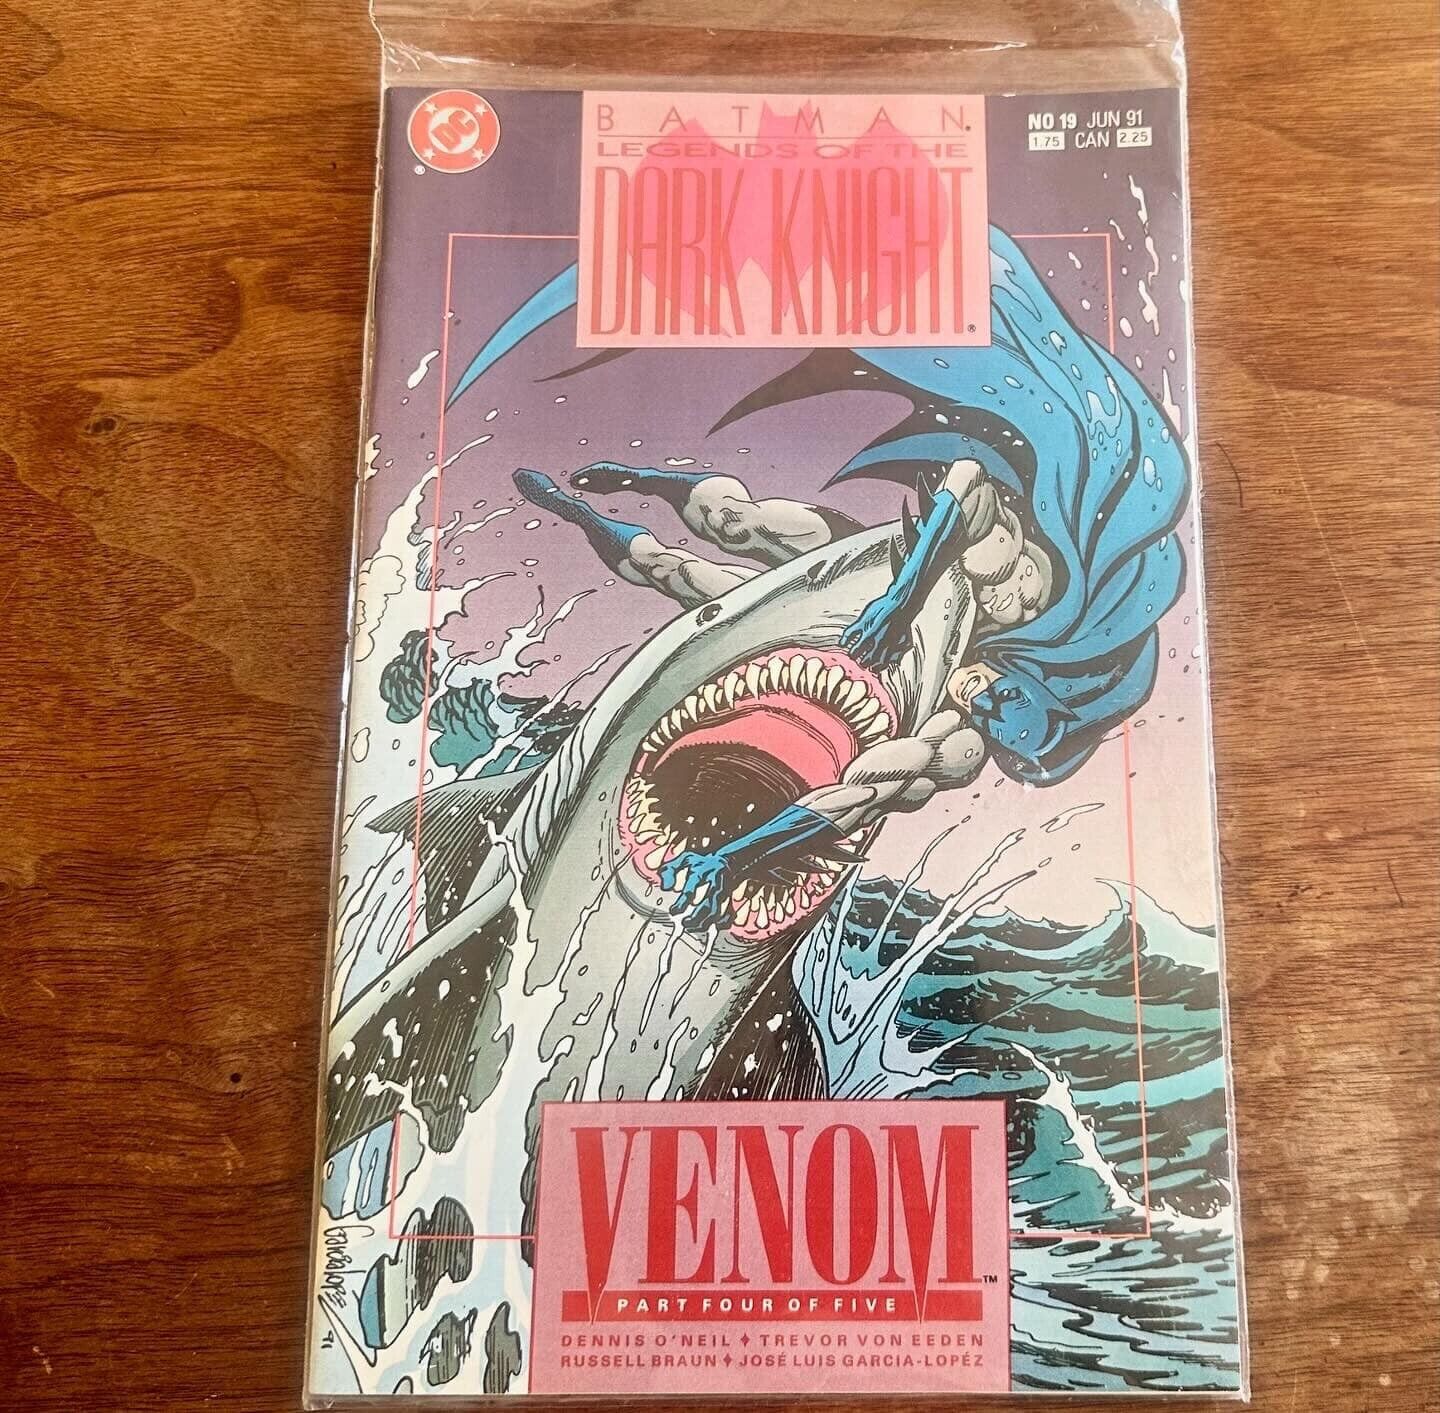 Batman Legend of the Dark Night: Venom Part Four of Five No.19 Released June 98